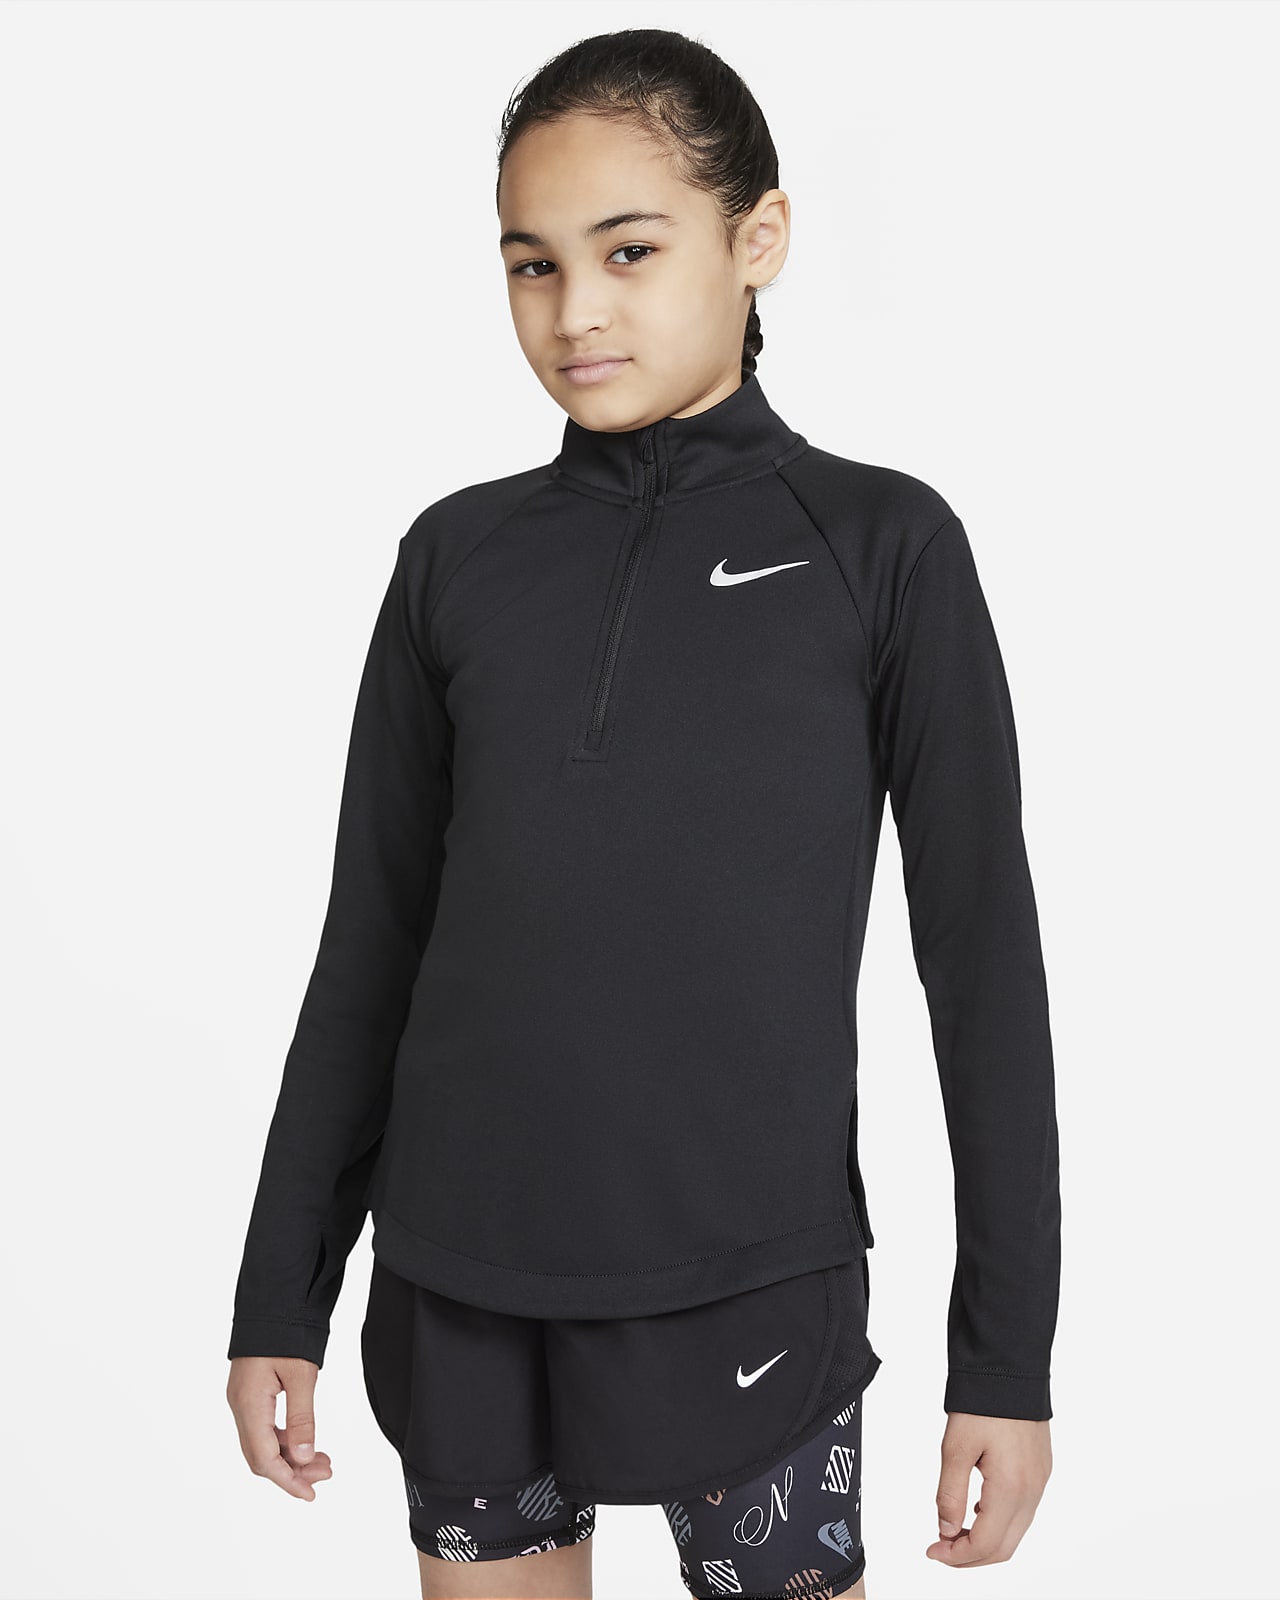 Nike Dri-FIT Hardlooptop met lange mouwen voor meisjes